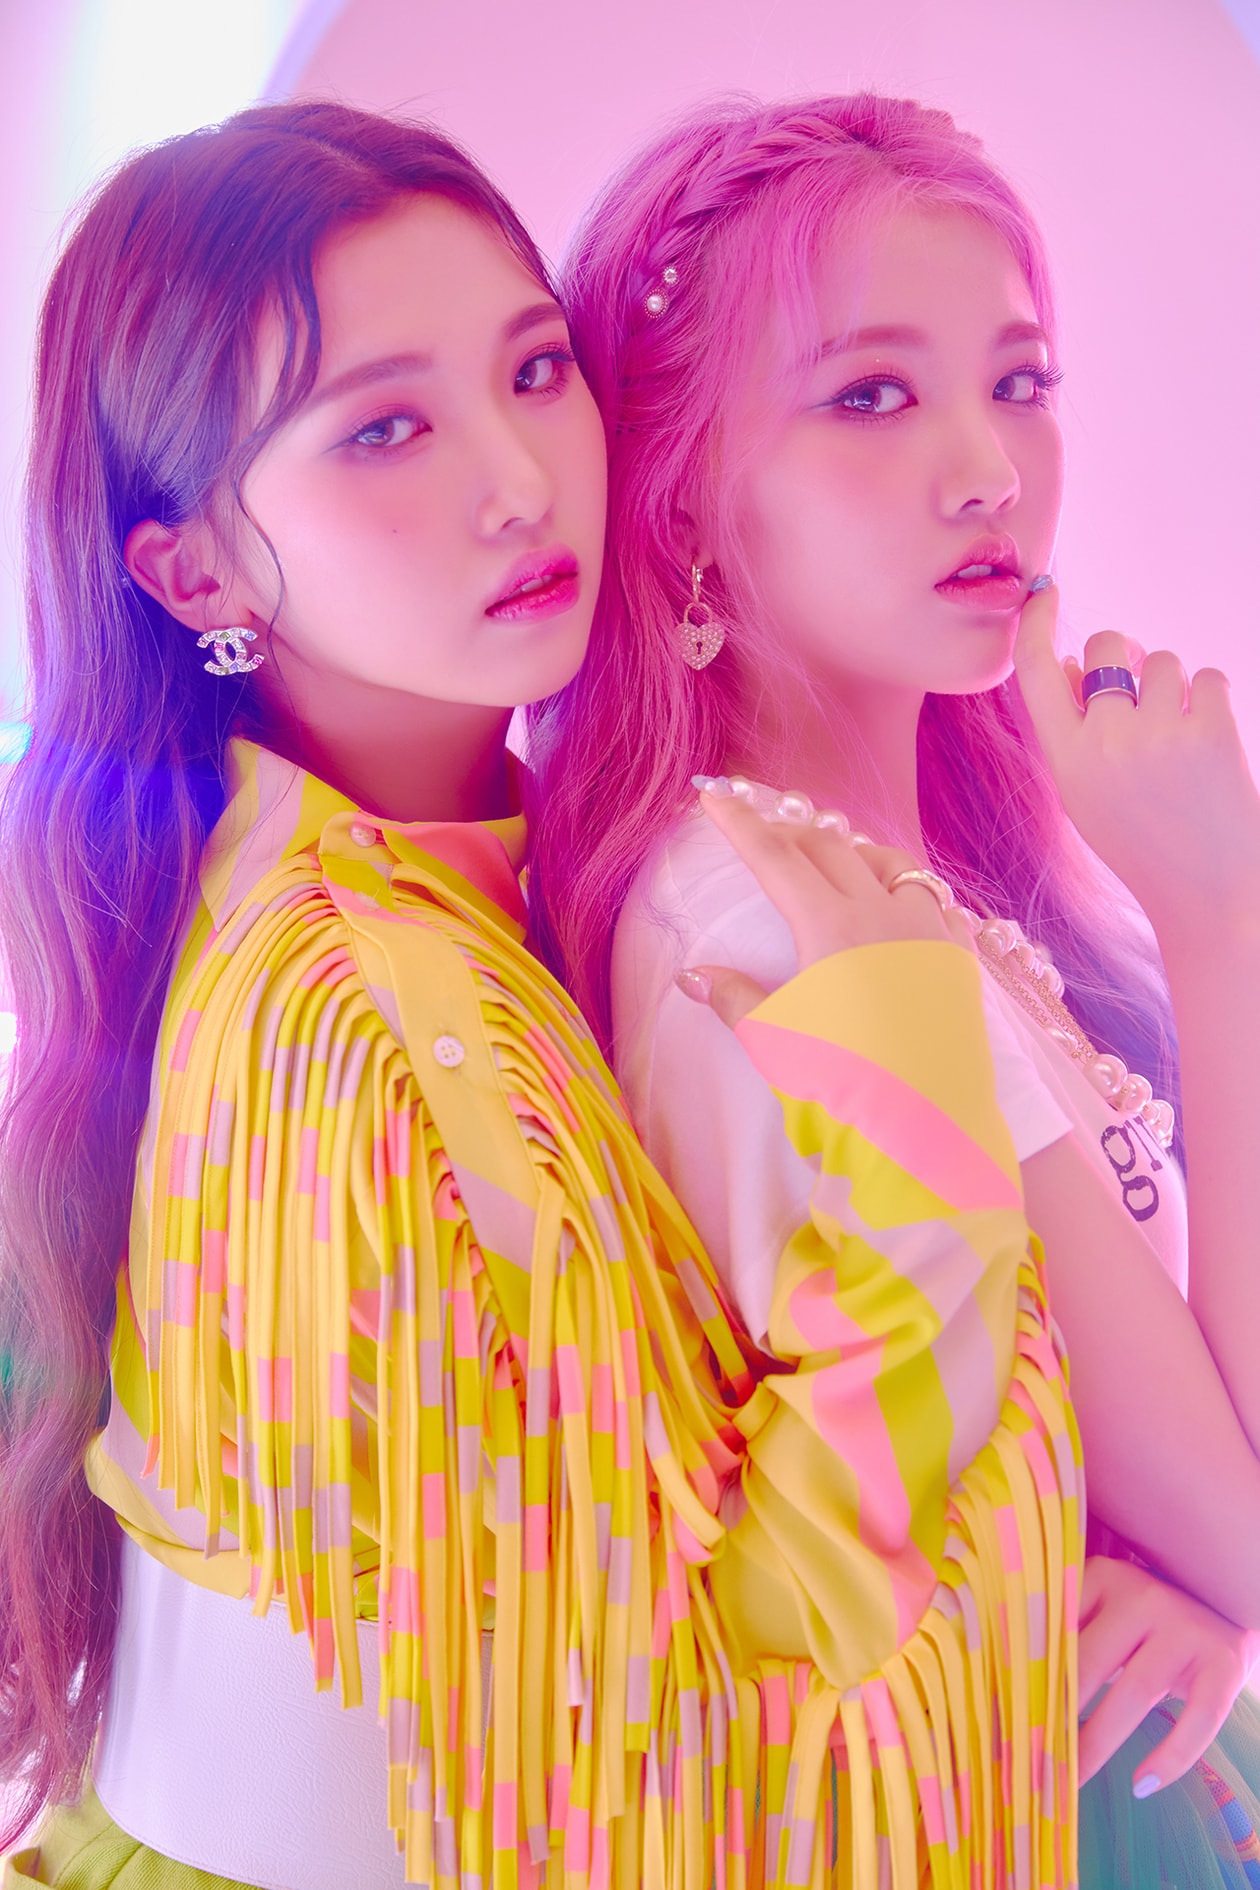 TRI.BE K-Pop Girl Group Korean Music Artists Singers Members Idols Songsun Kelly Jinha Hyunbin Jia Soeun Mire Neon Lights Pink